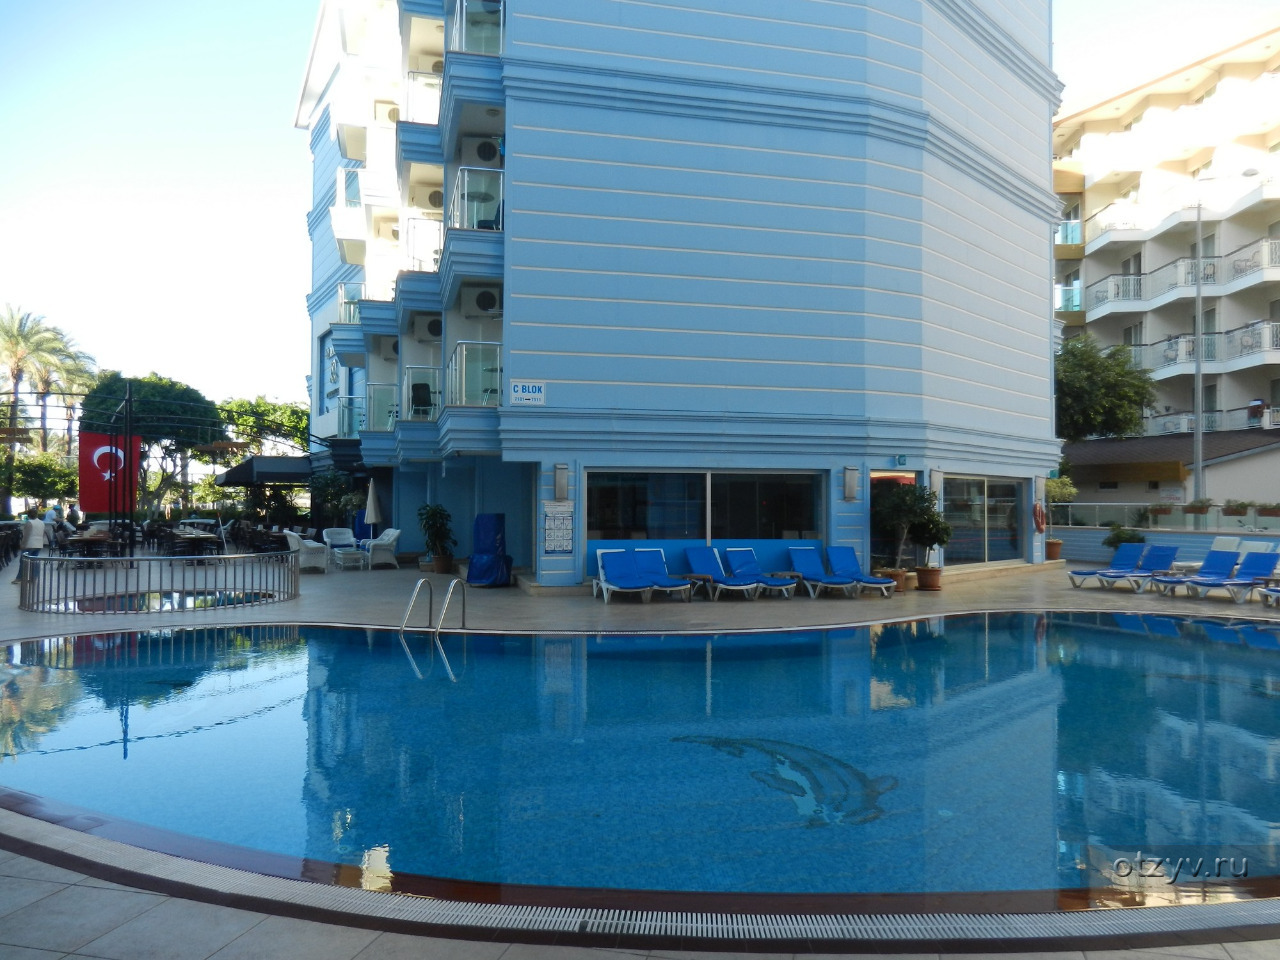 Sultan Sipahi Resort 4 ** пляж. Sultan sipahi resort hotel